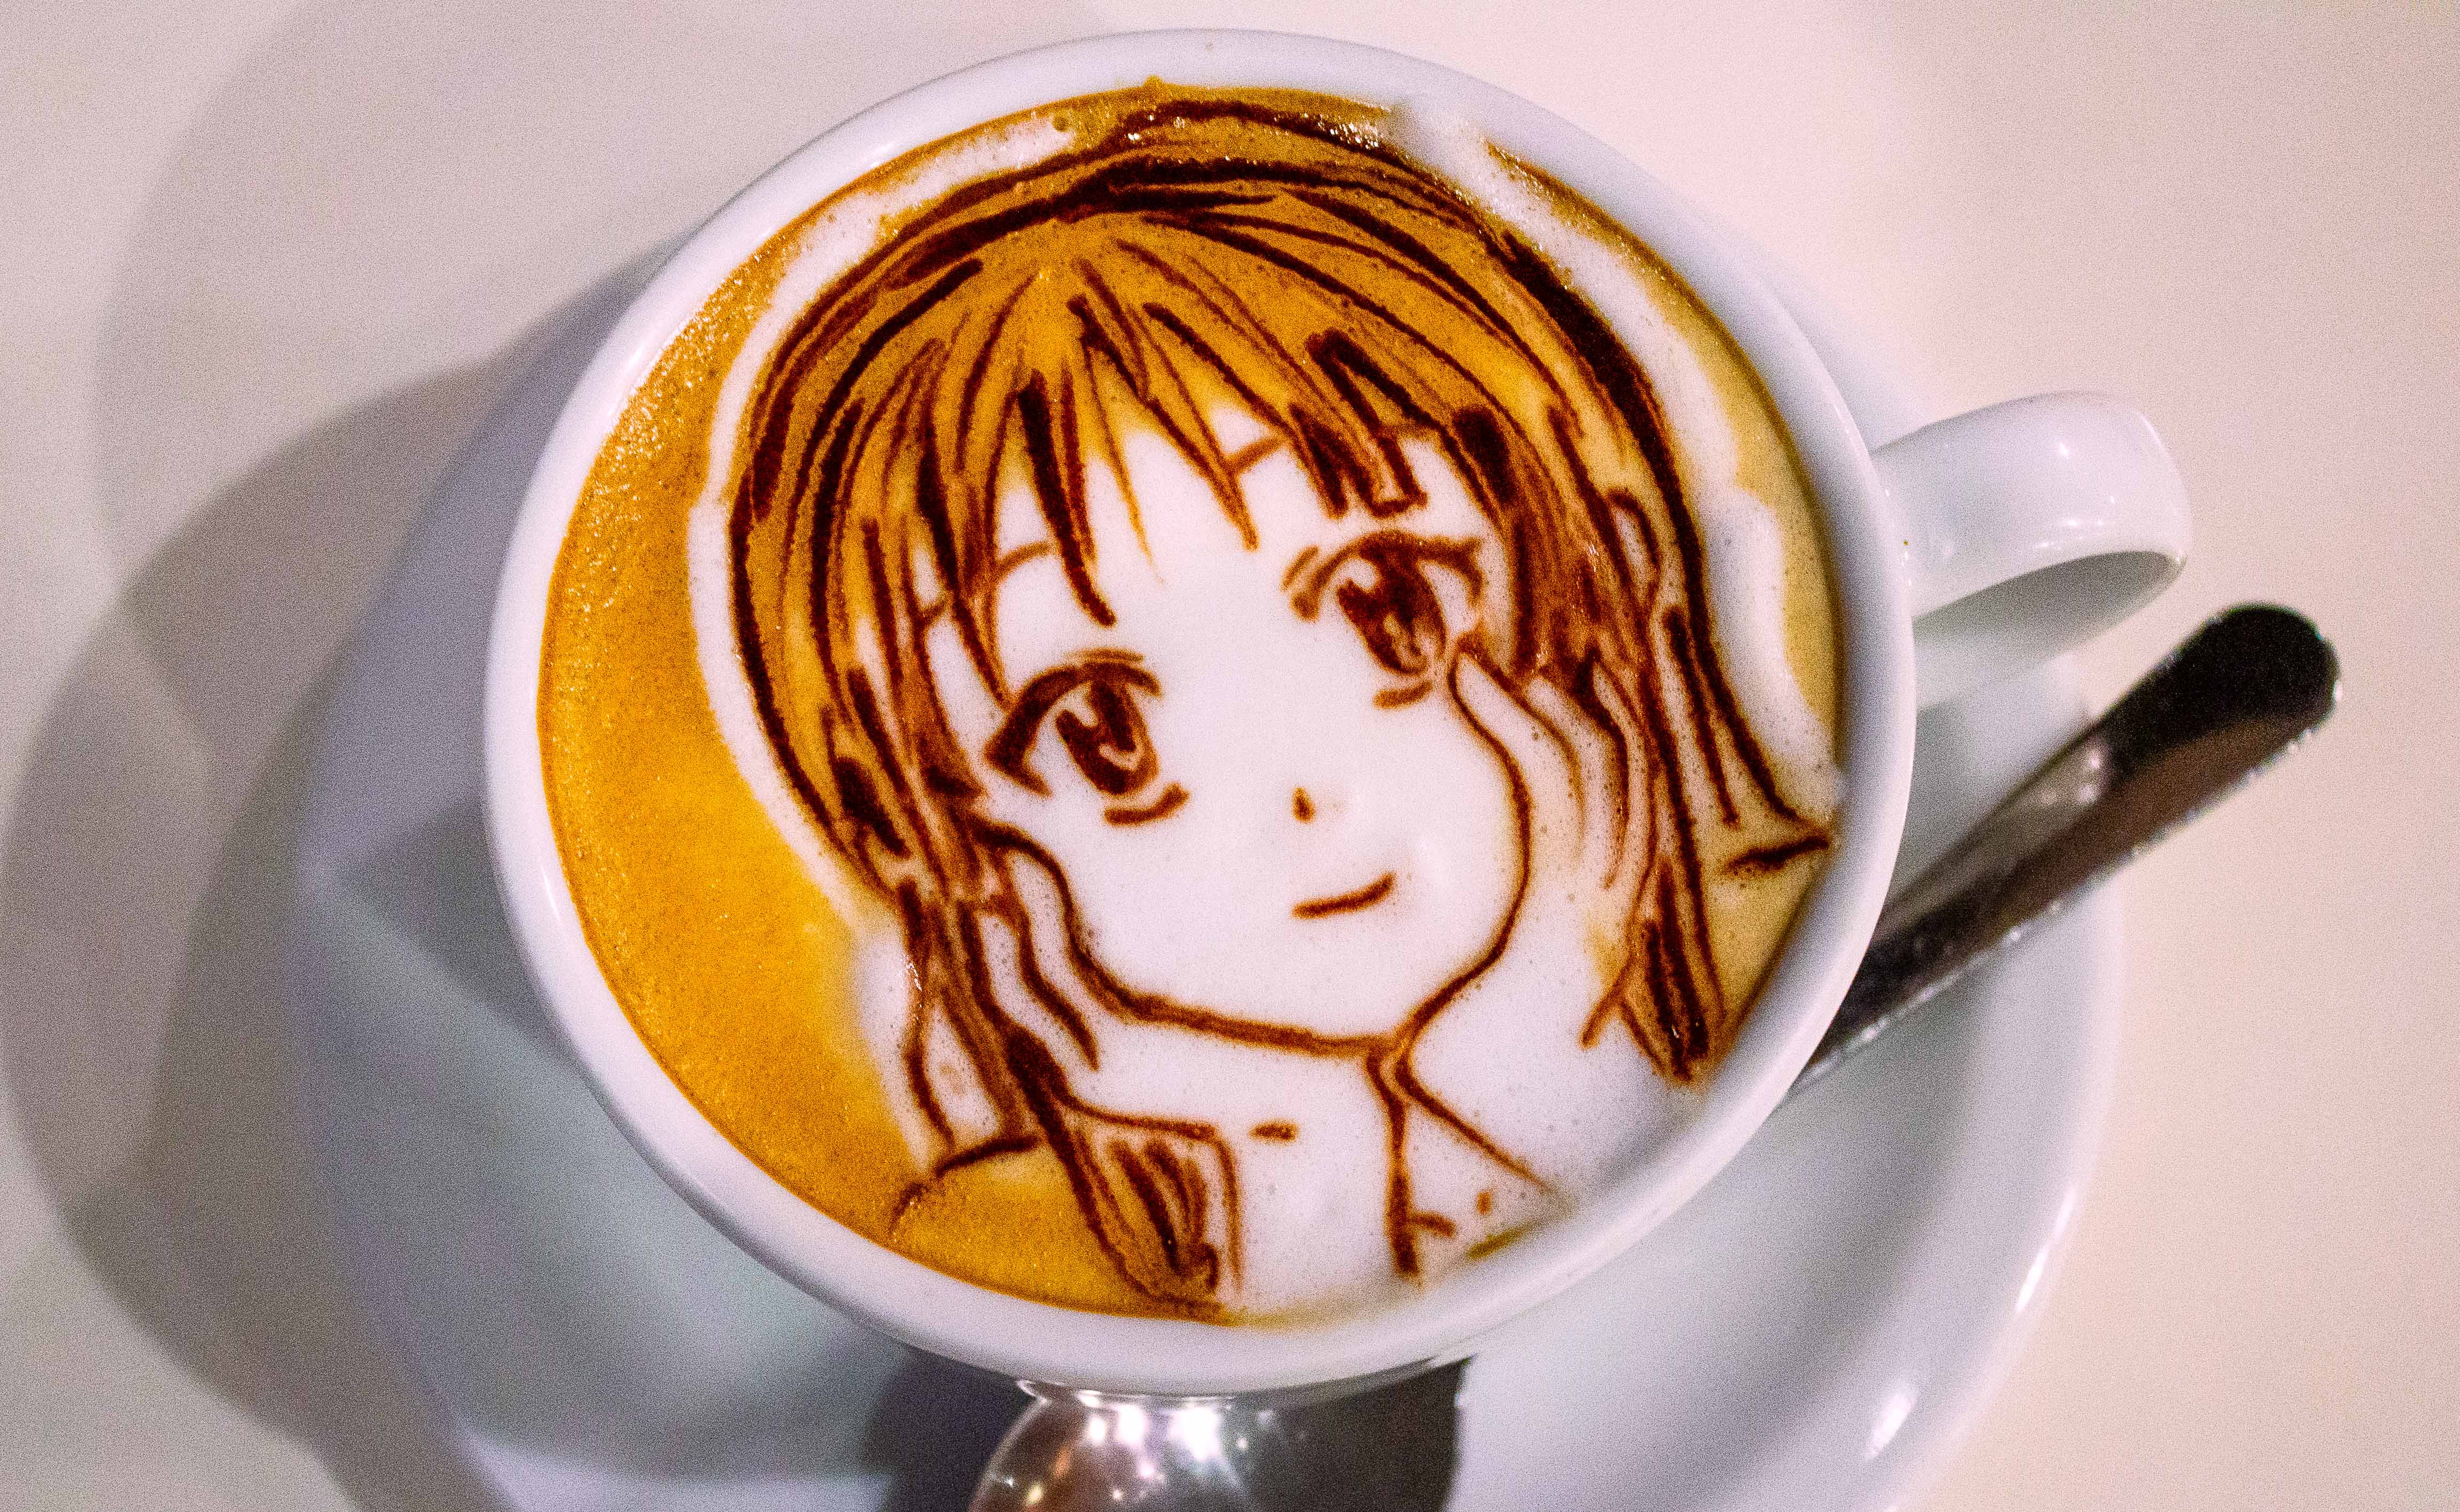 Mio coffee - Reissue cafe